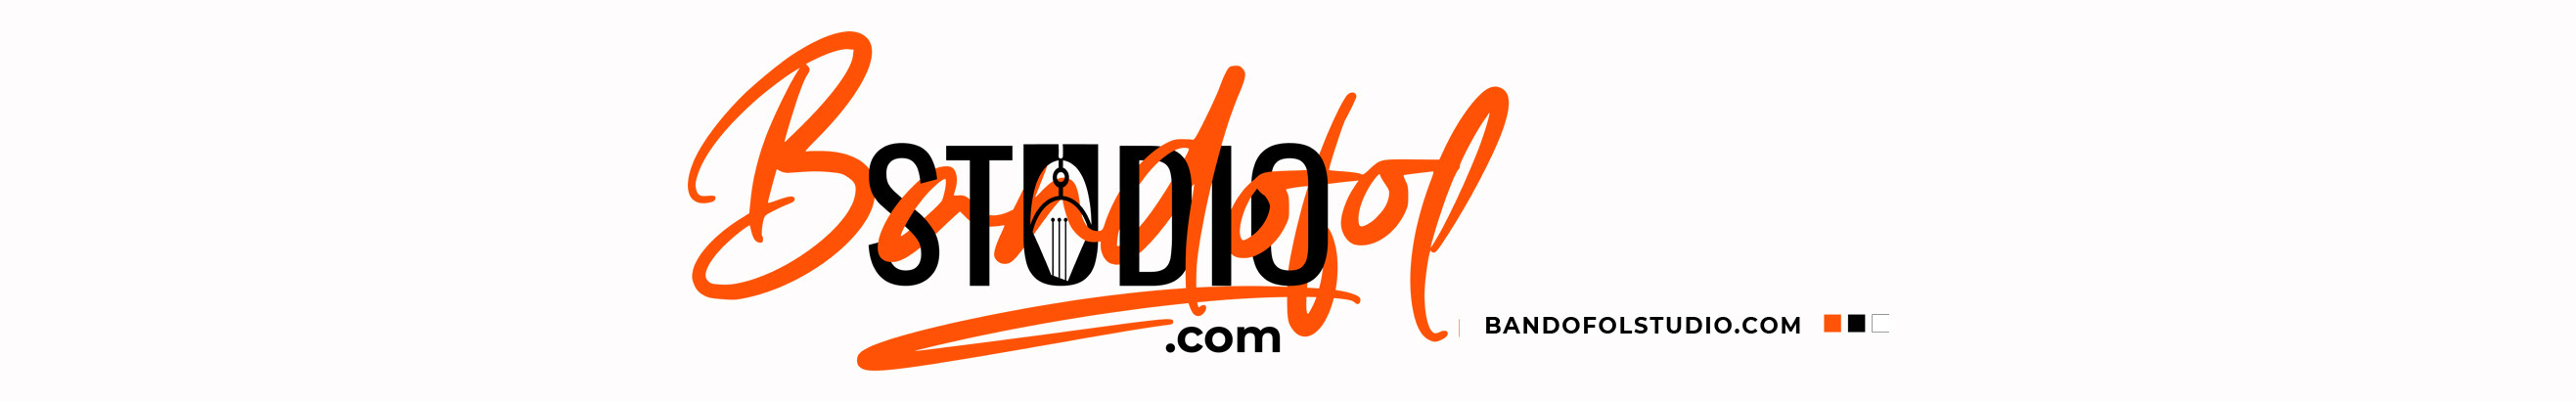 Bandofol Studio's profile banner